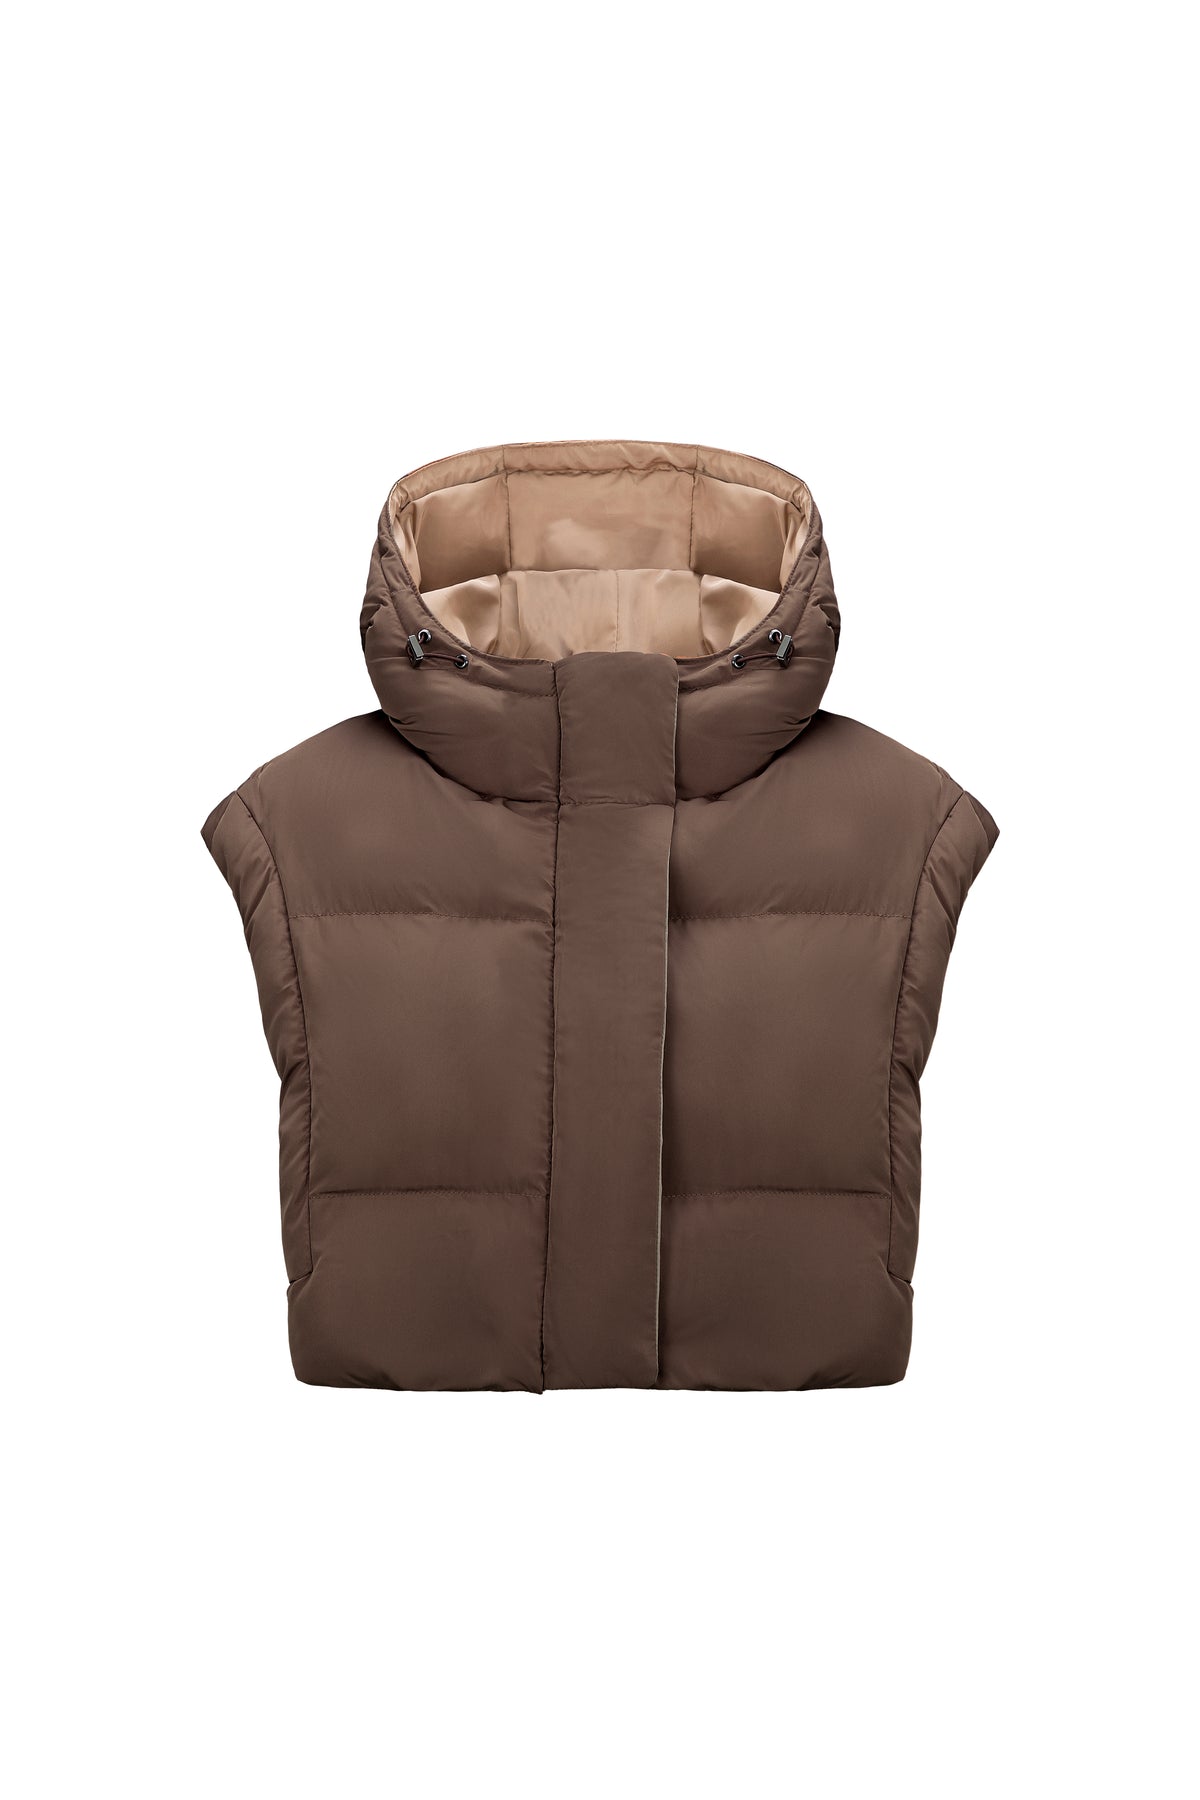 Reversible belted coat in Brown